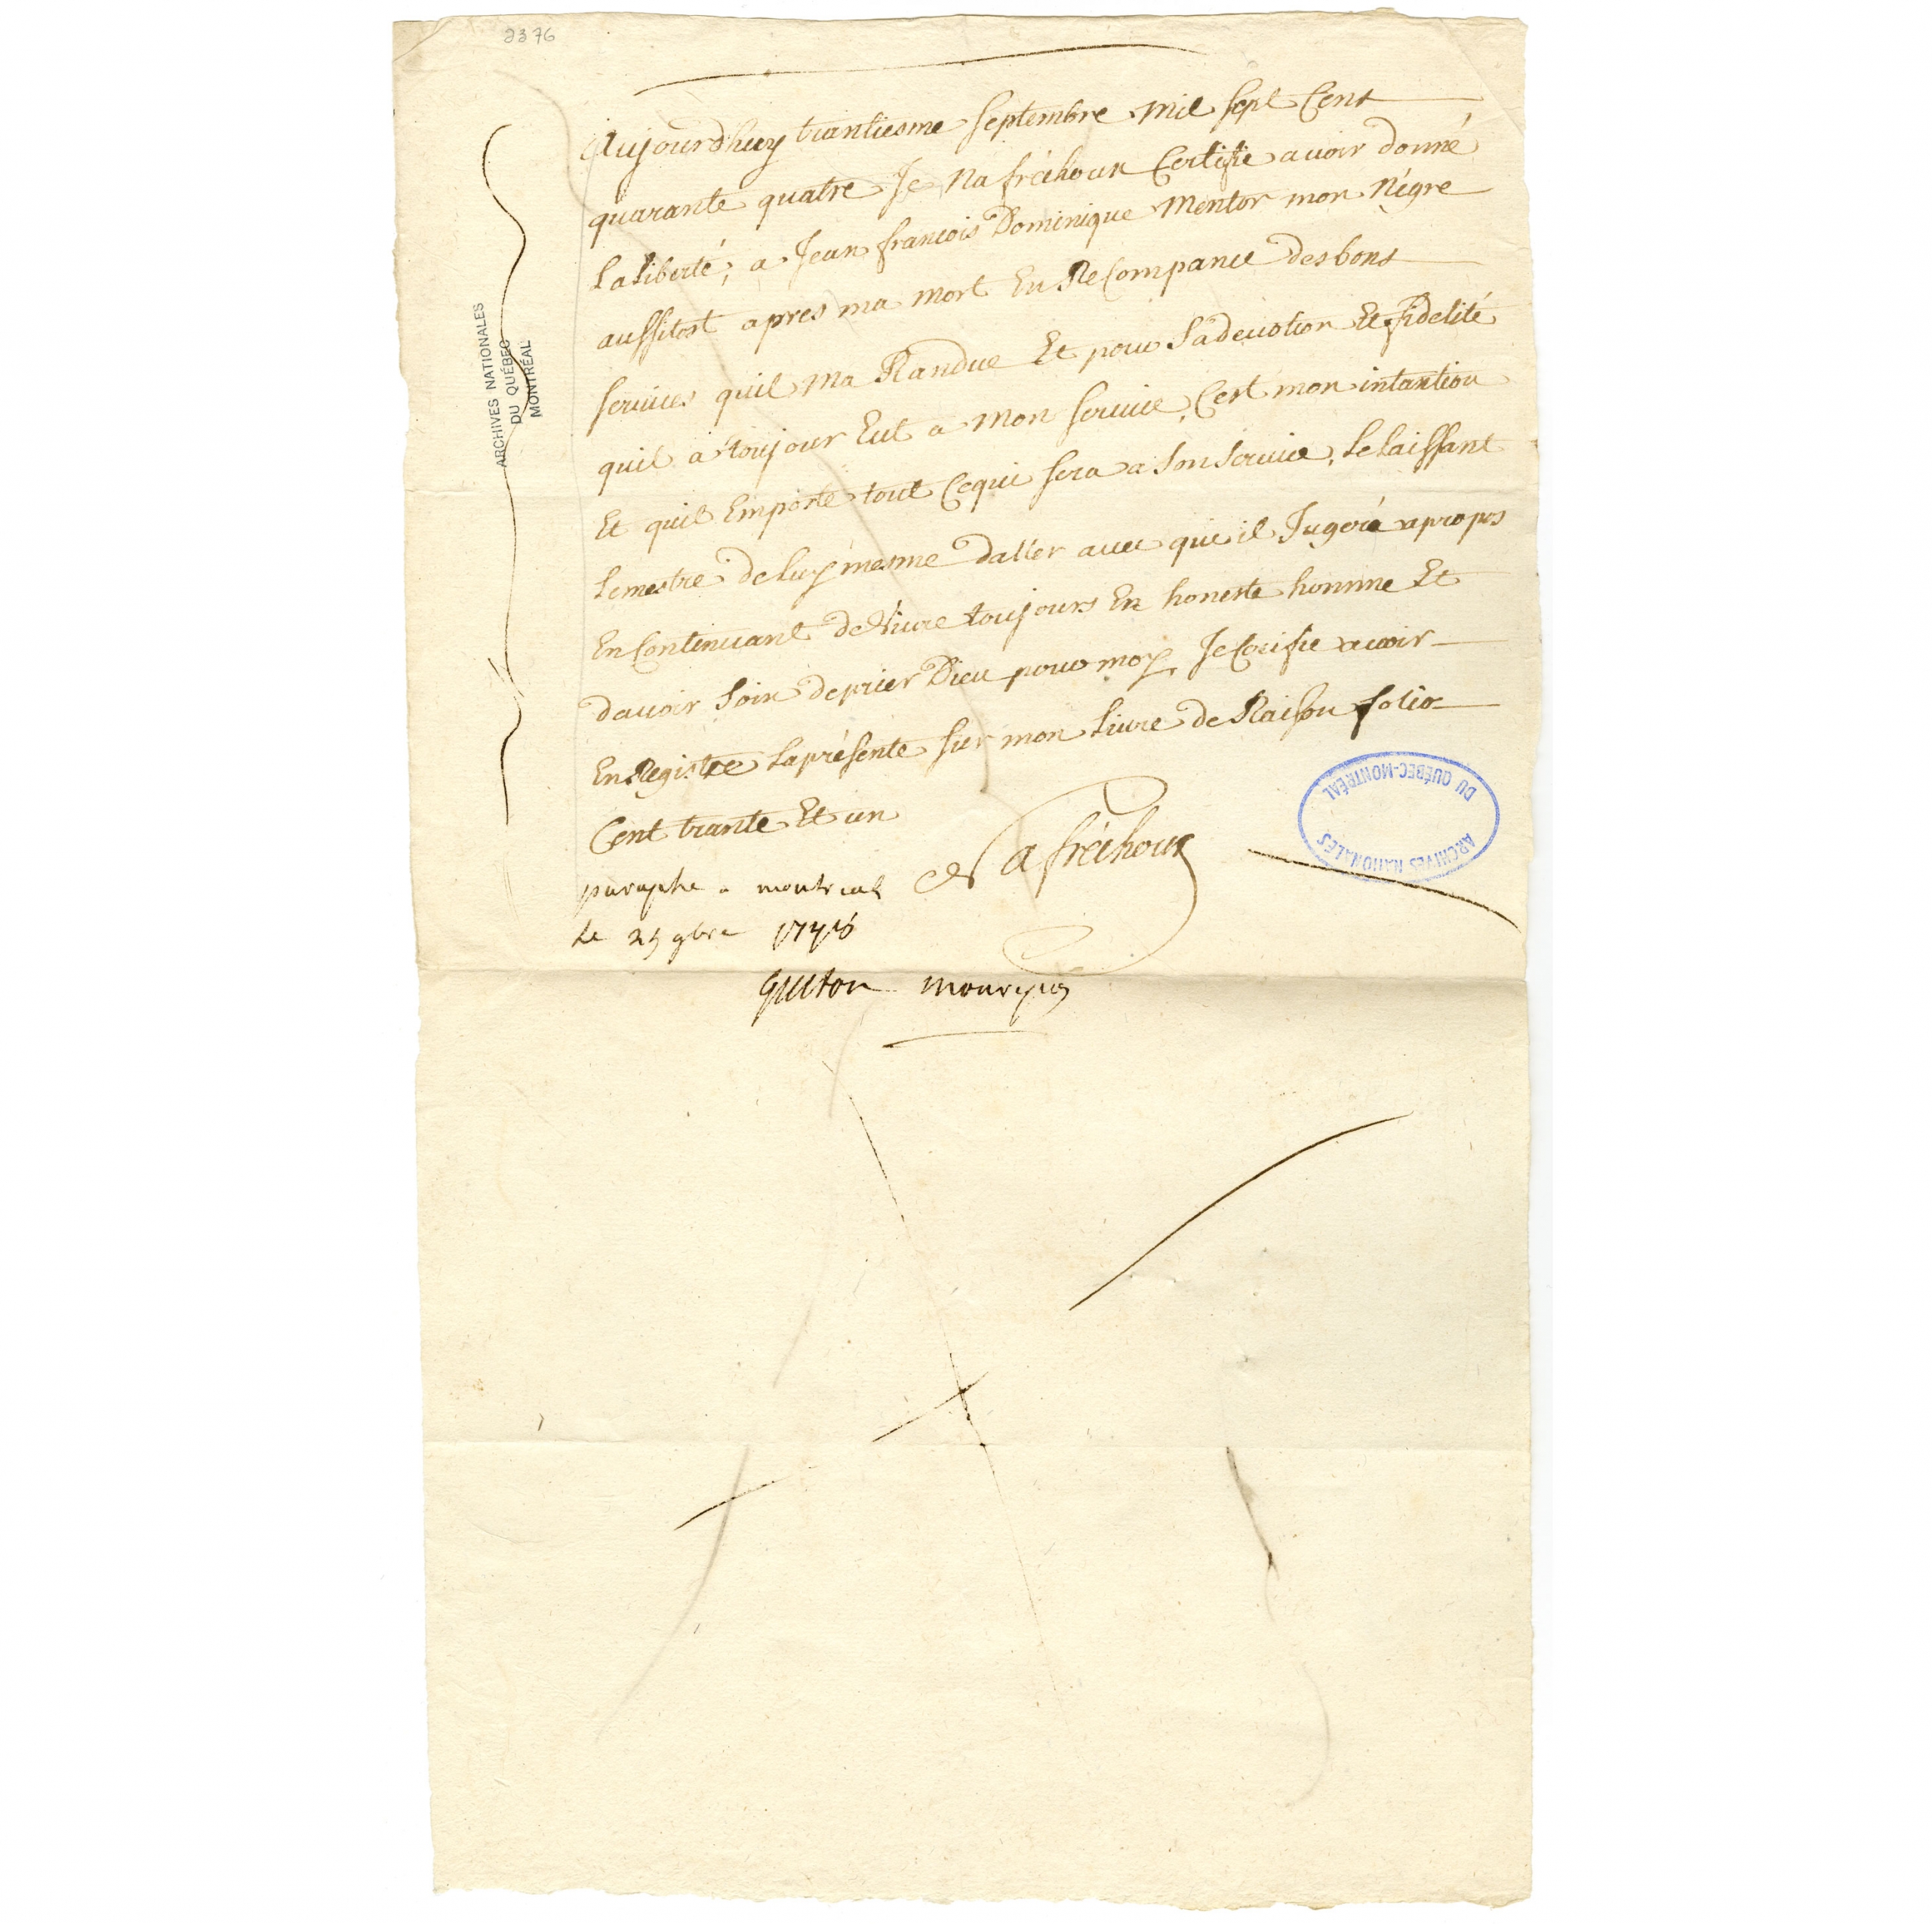 Scanned copy of emancipation records circa 1744